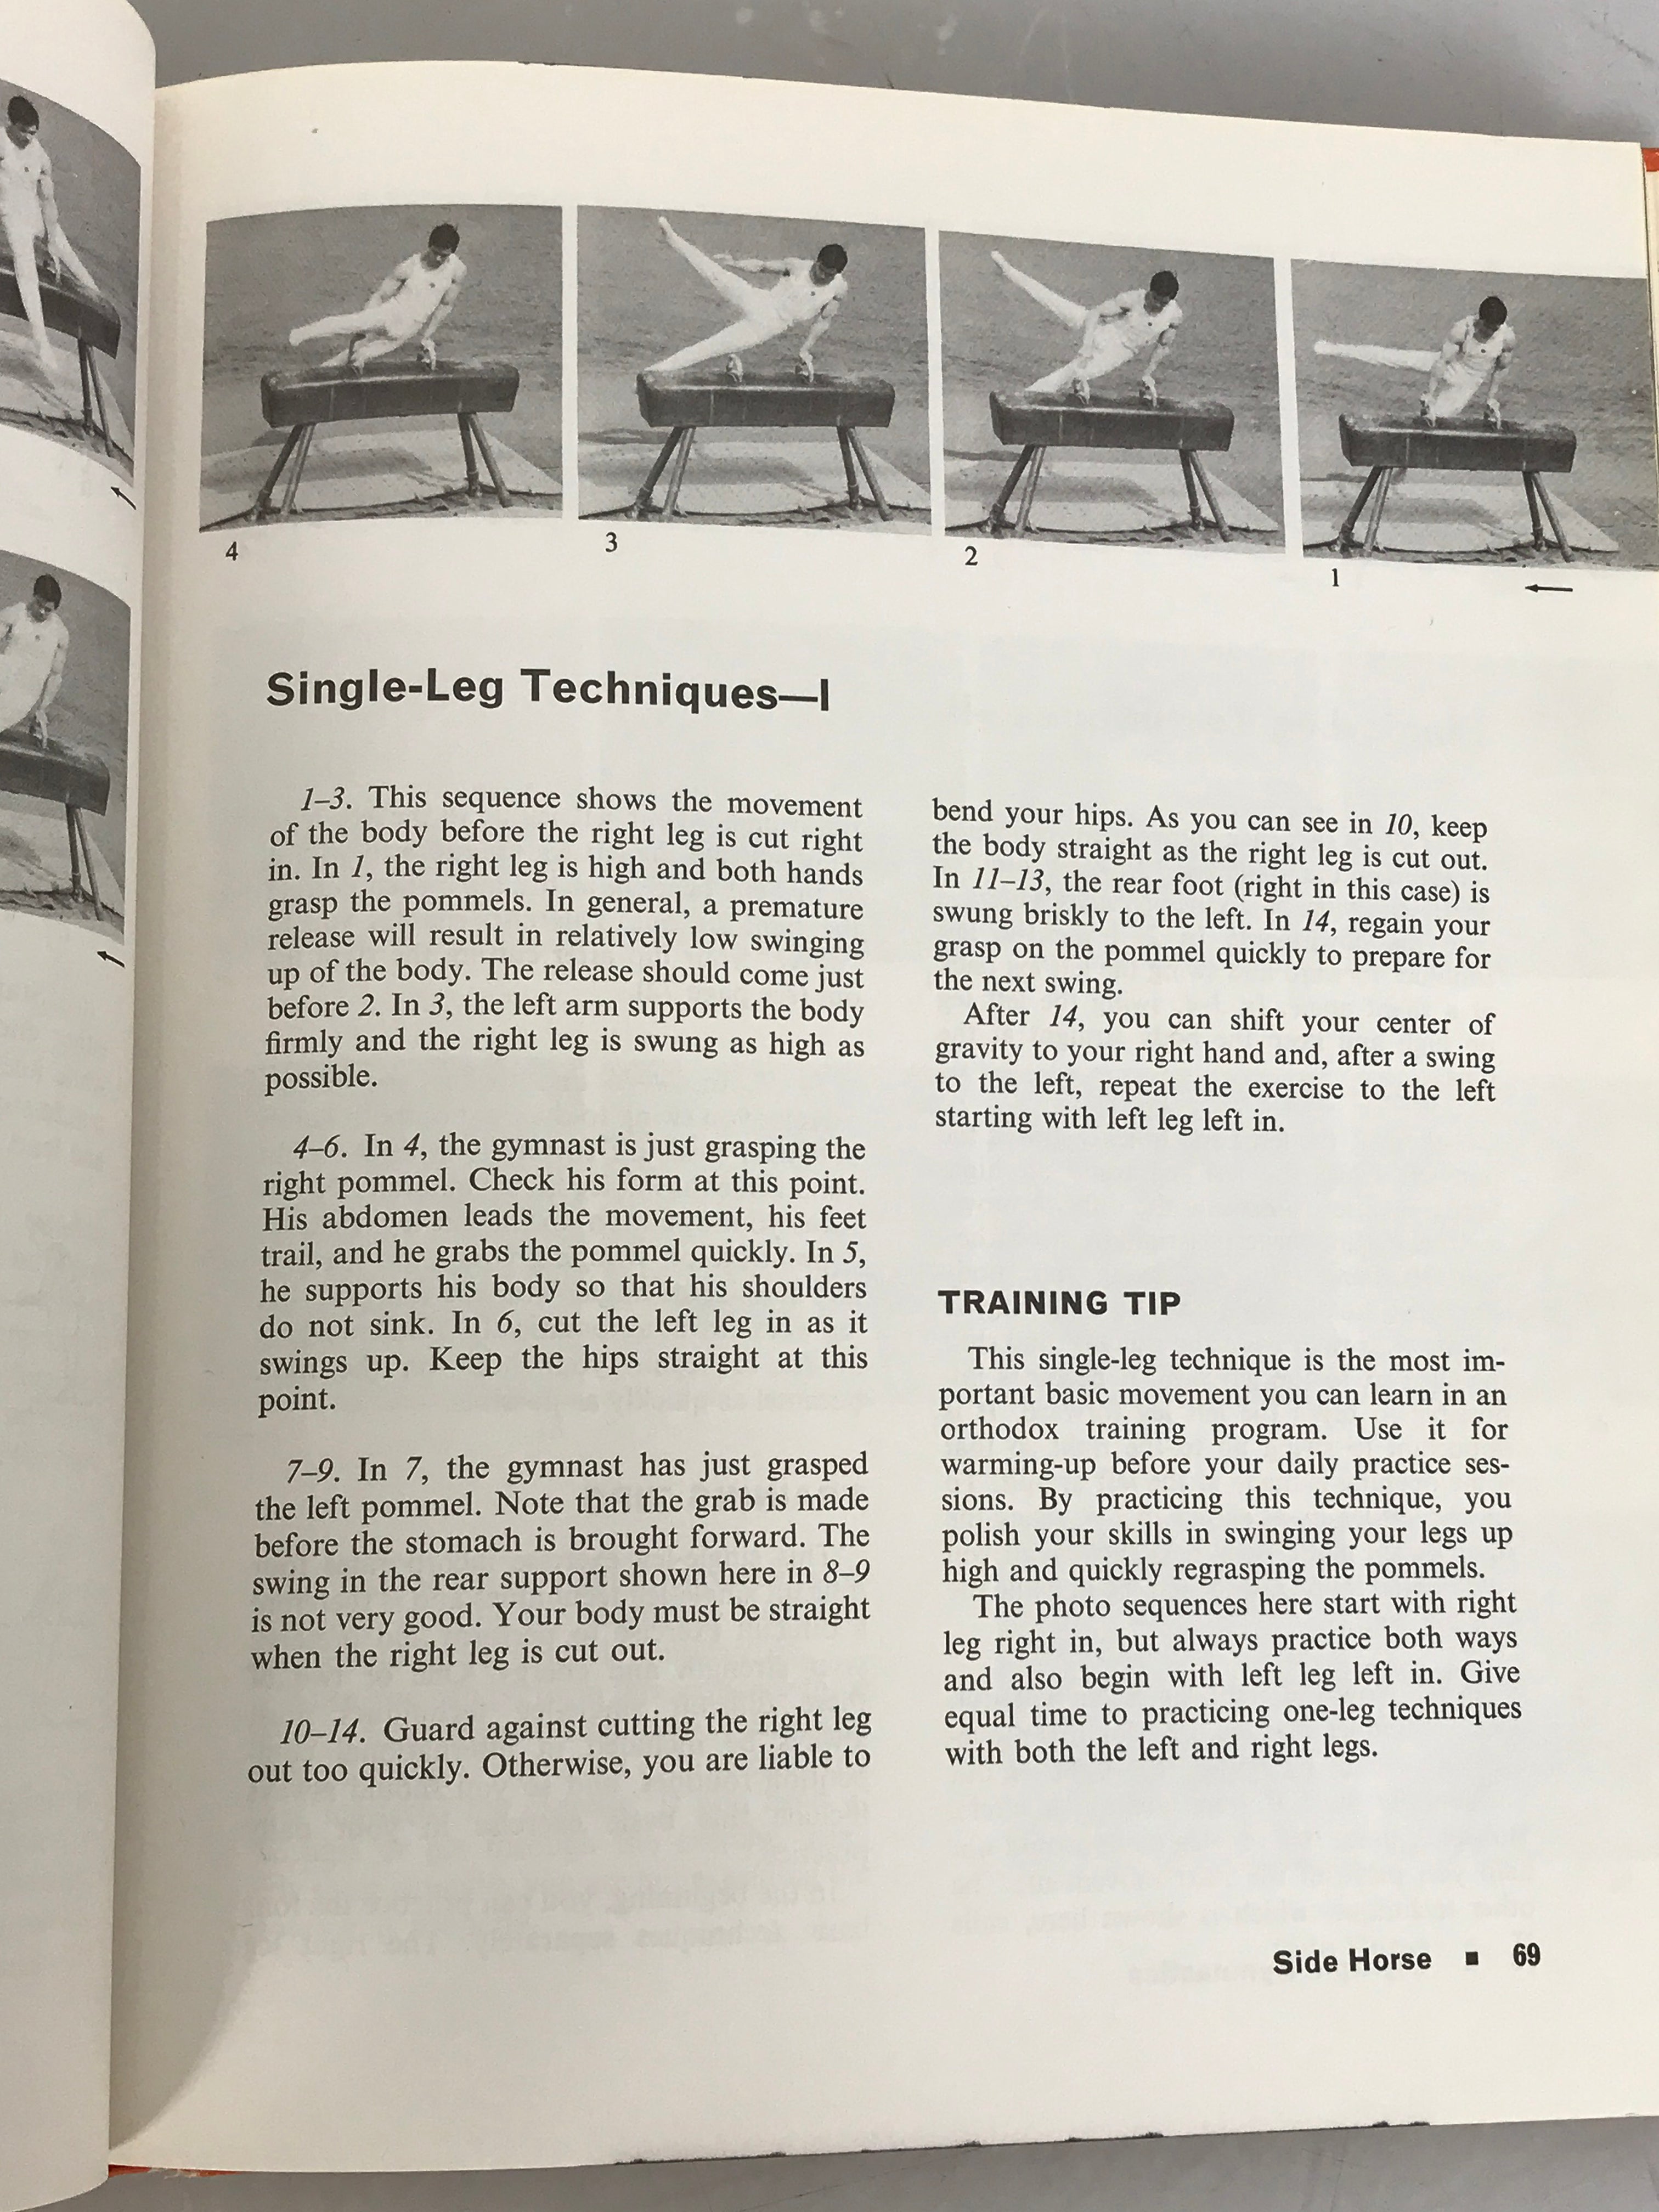 Lot of 3 Gymnastics Books: Olympic Gymnastics (1976), Progressive Gymnastics-YMCA (1987), and Women's Gymnastics (1975) HC SC